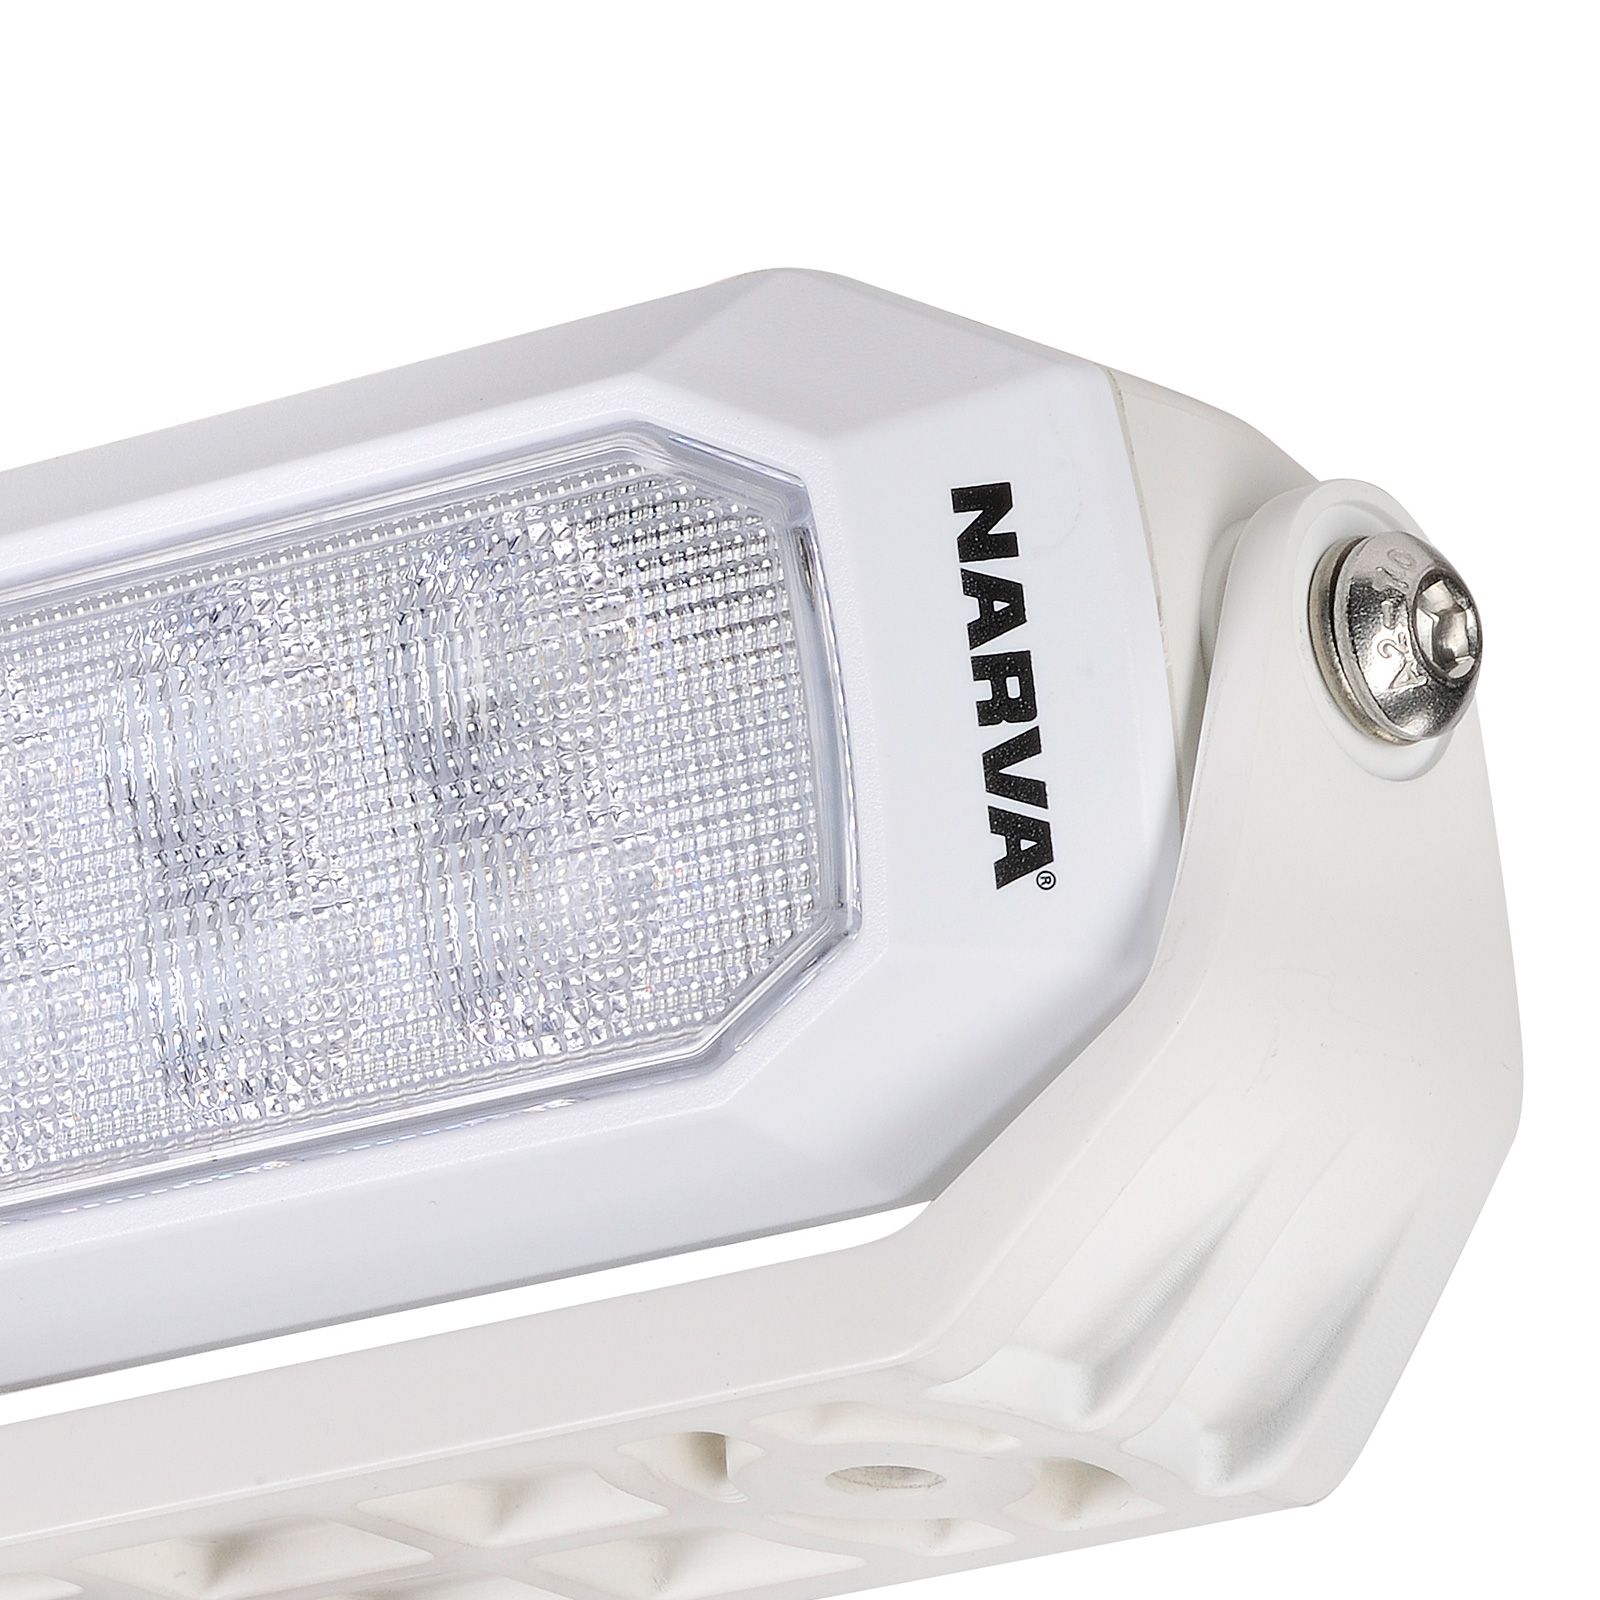 Narva White LED Deck lamp body and bracket